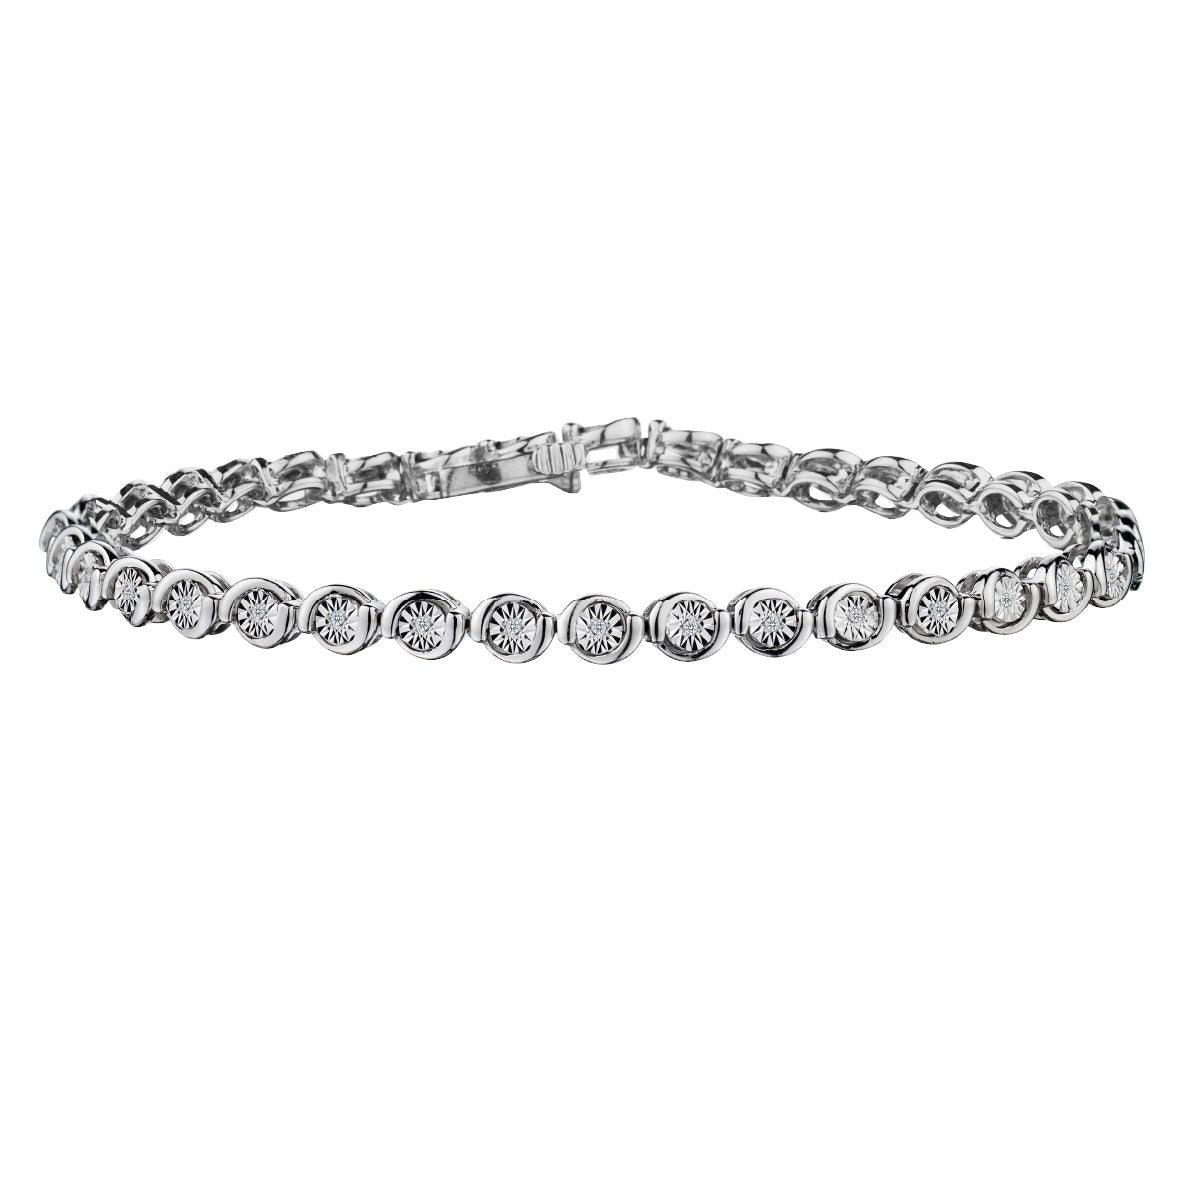 15 Carat of Diamonds Bracelet, SilverNOW